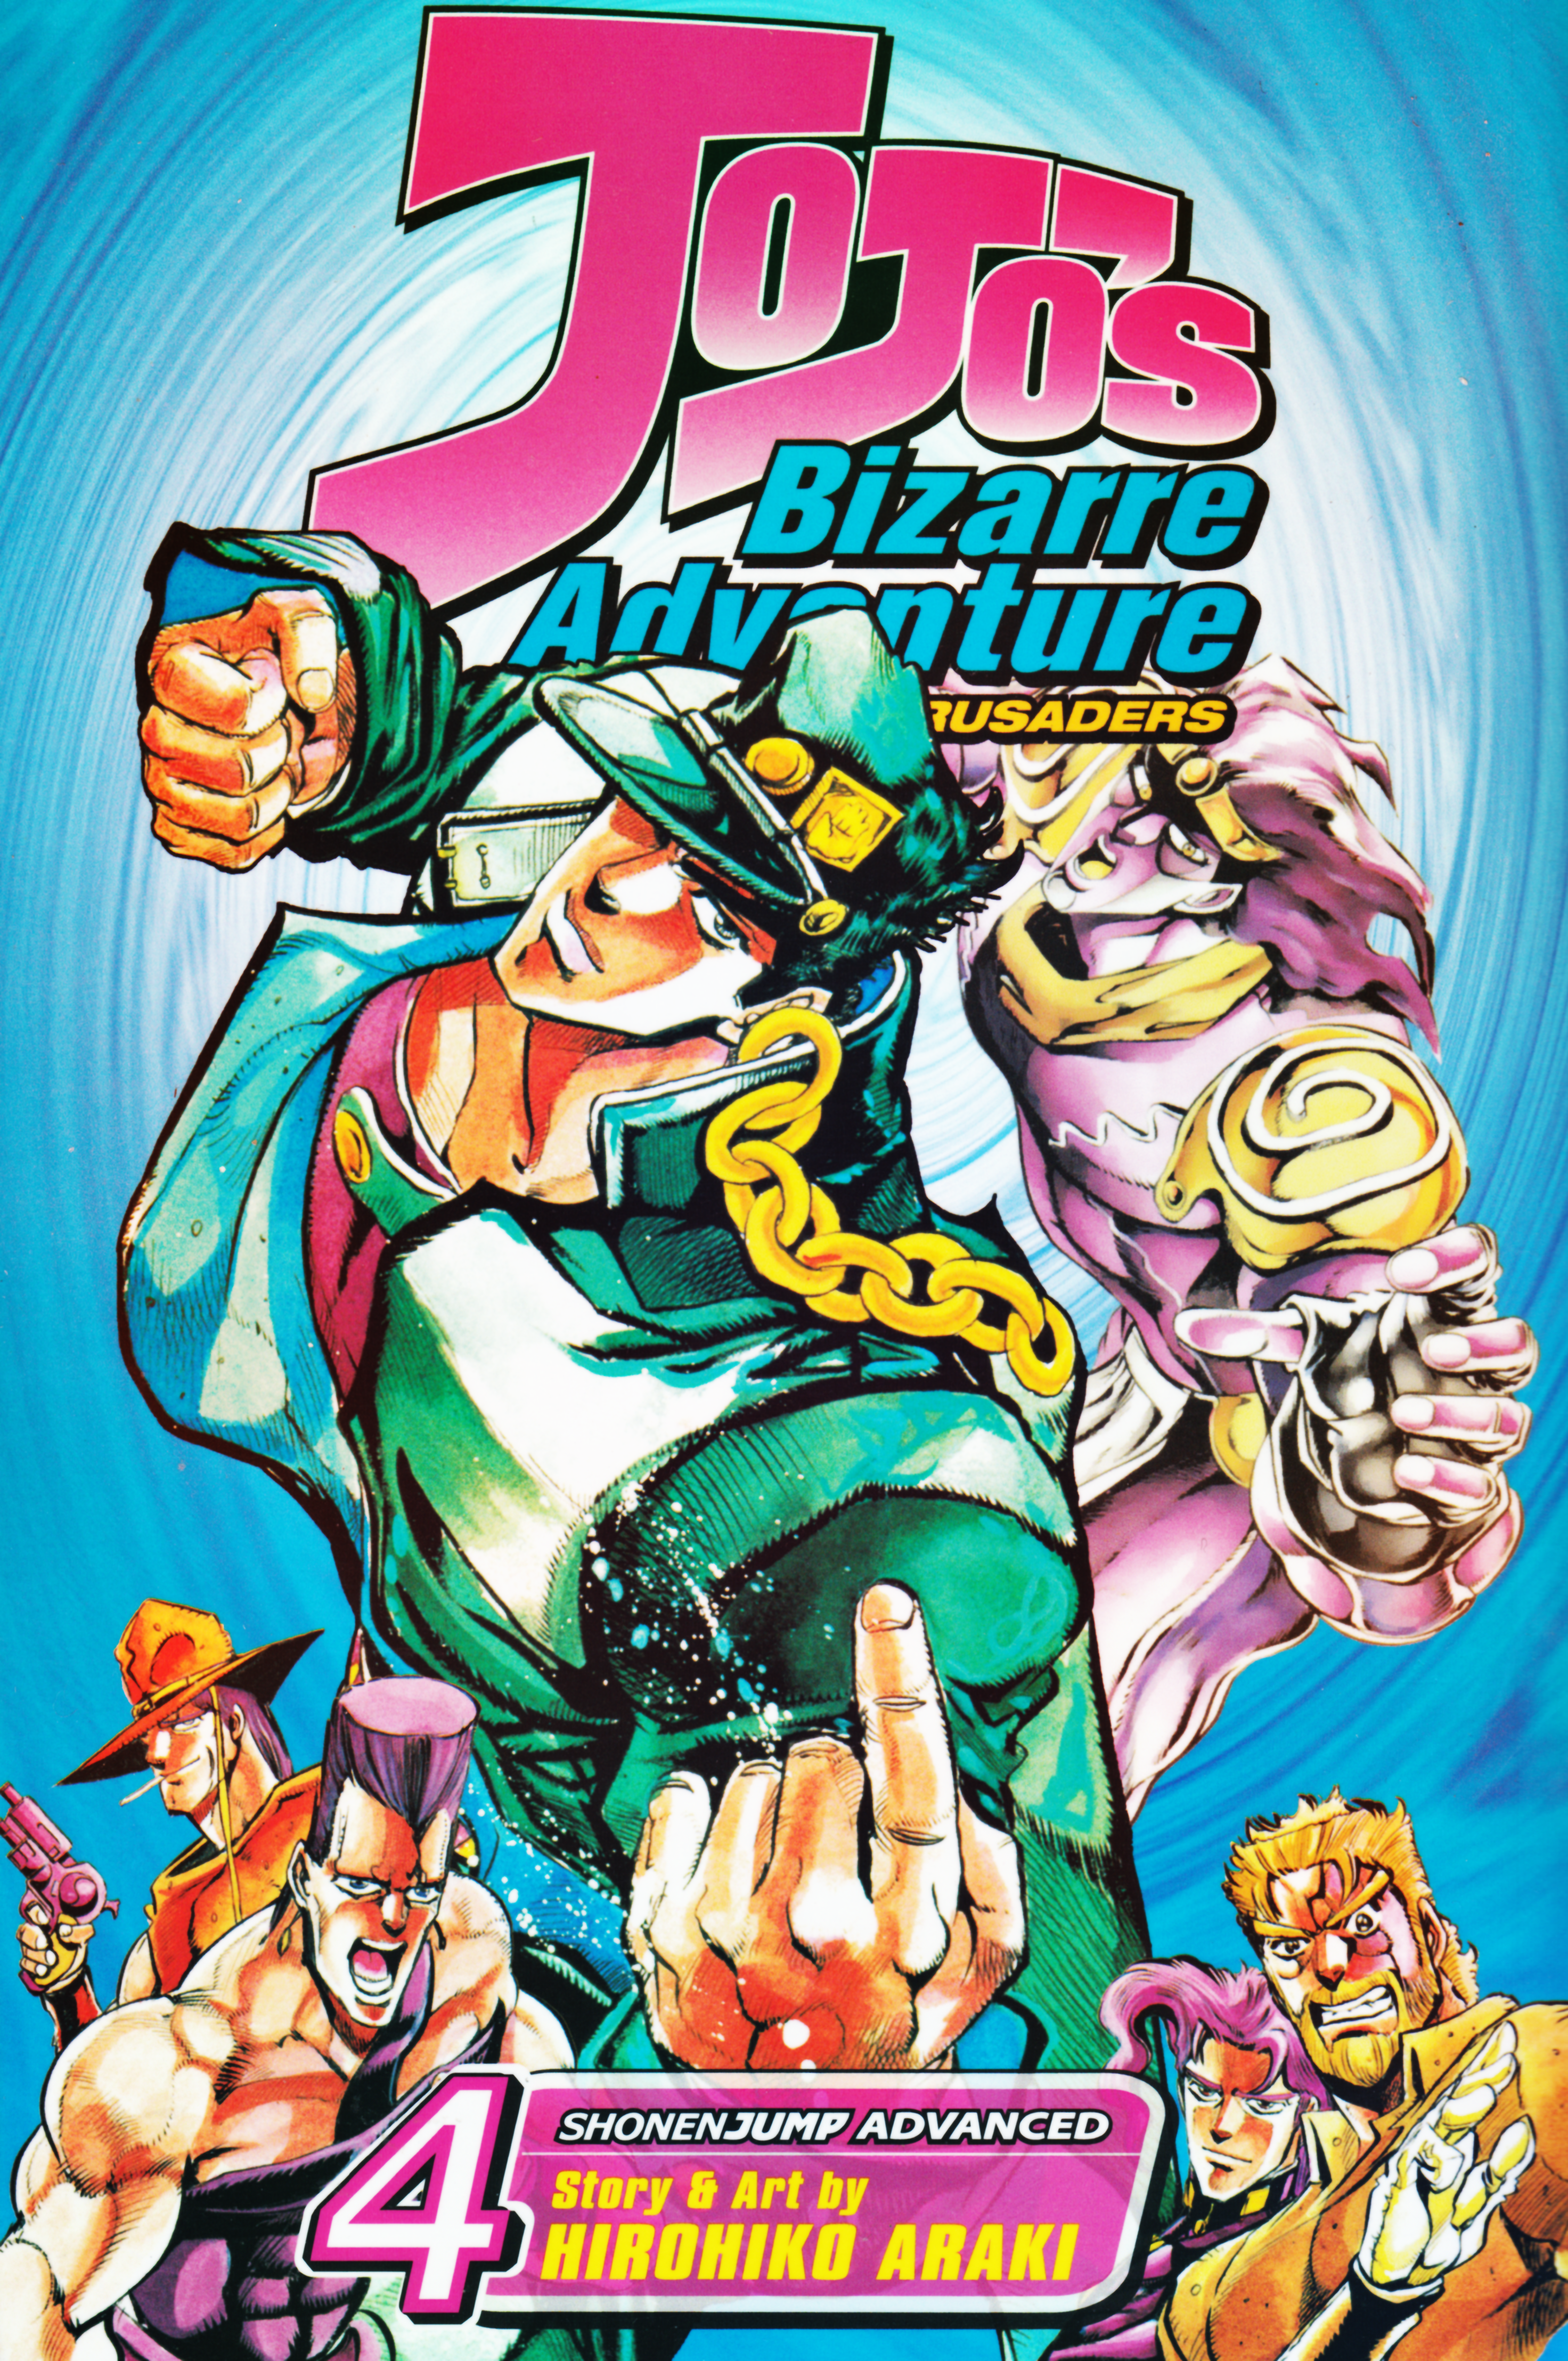 JoJo's Bizarre Adventure: Stardust Crusaders - Vol 4 Cover by Hirohiko Araki